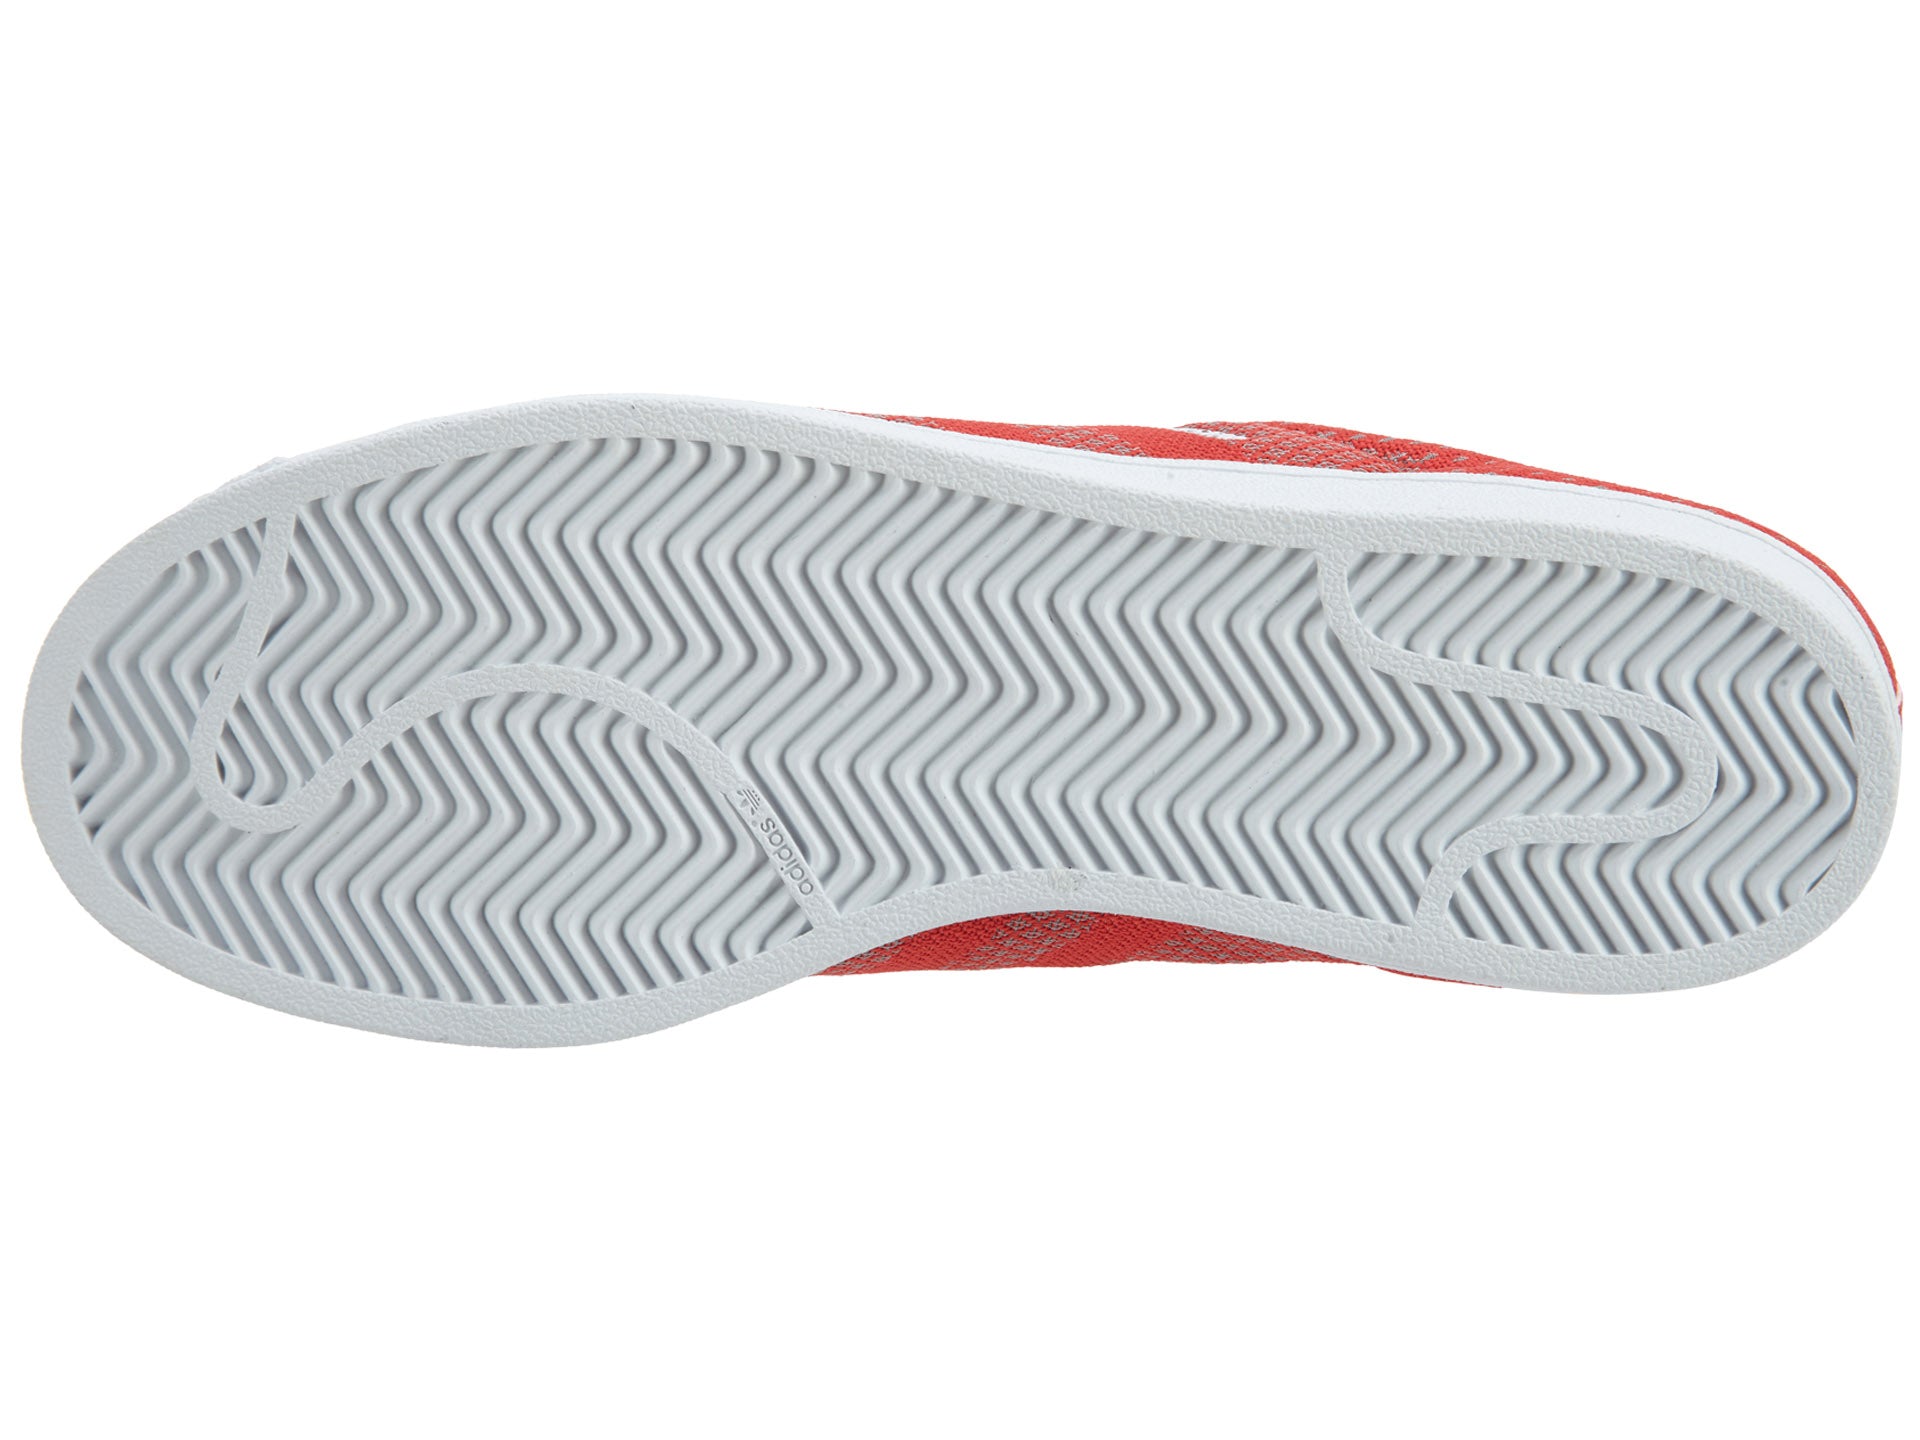 adidas Superstar Weave Pack Tomato Tomat Footwear White